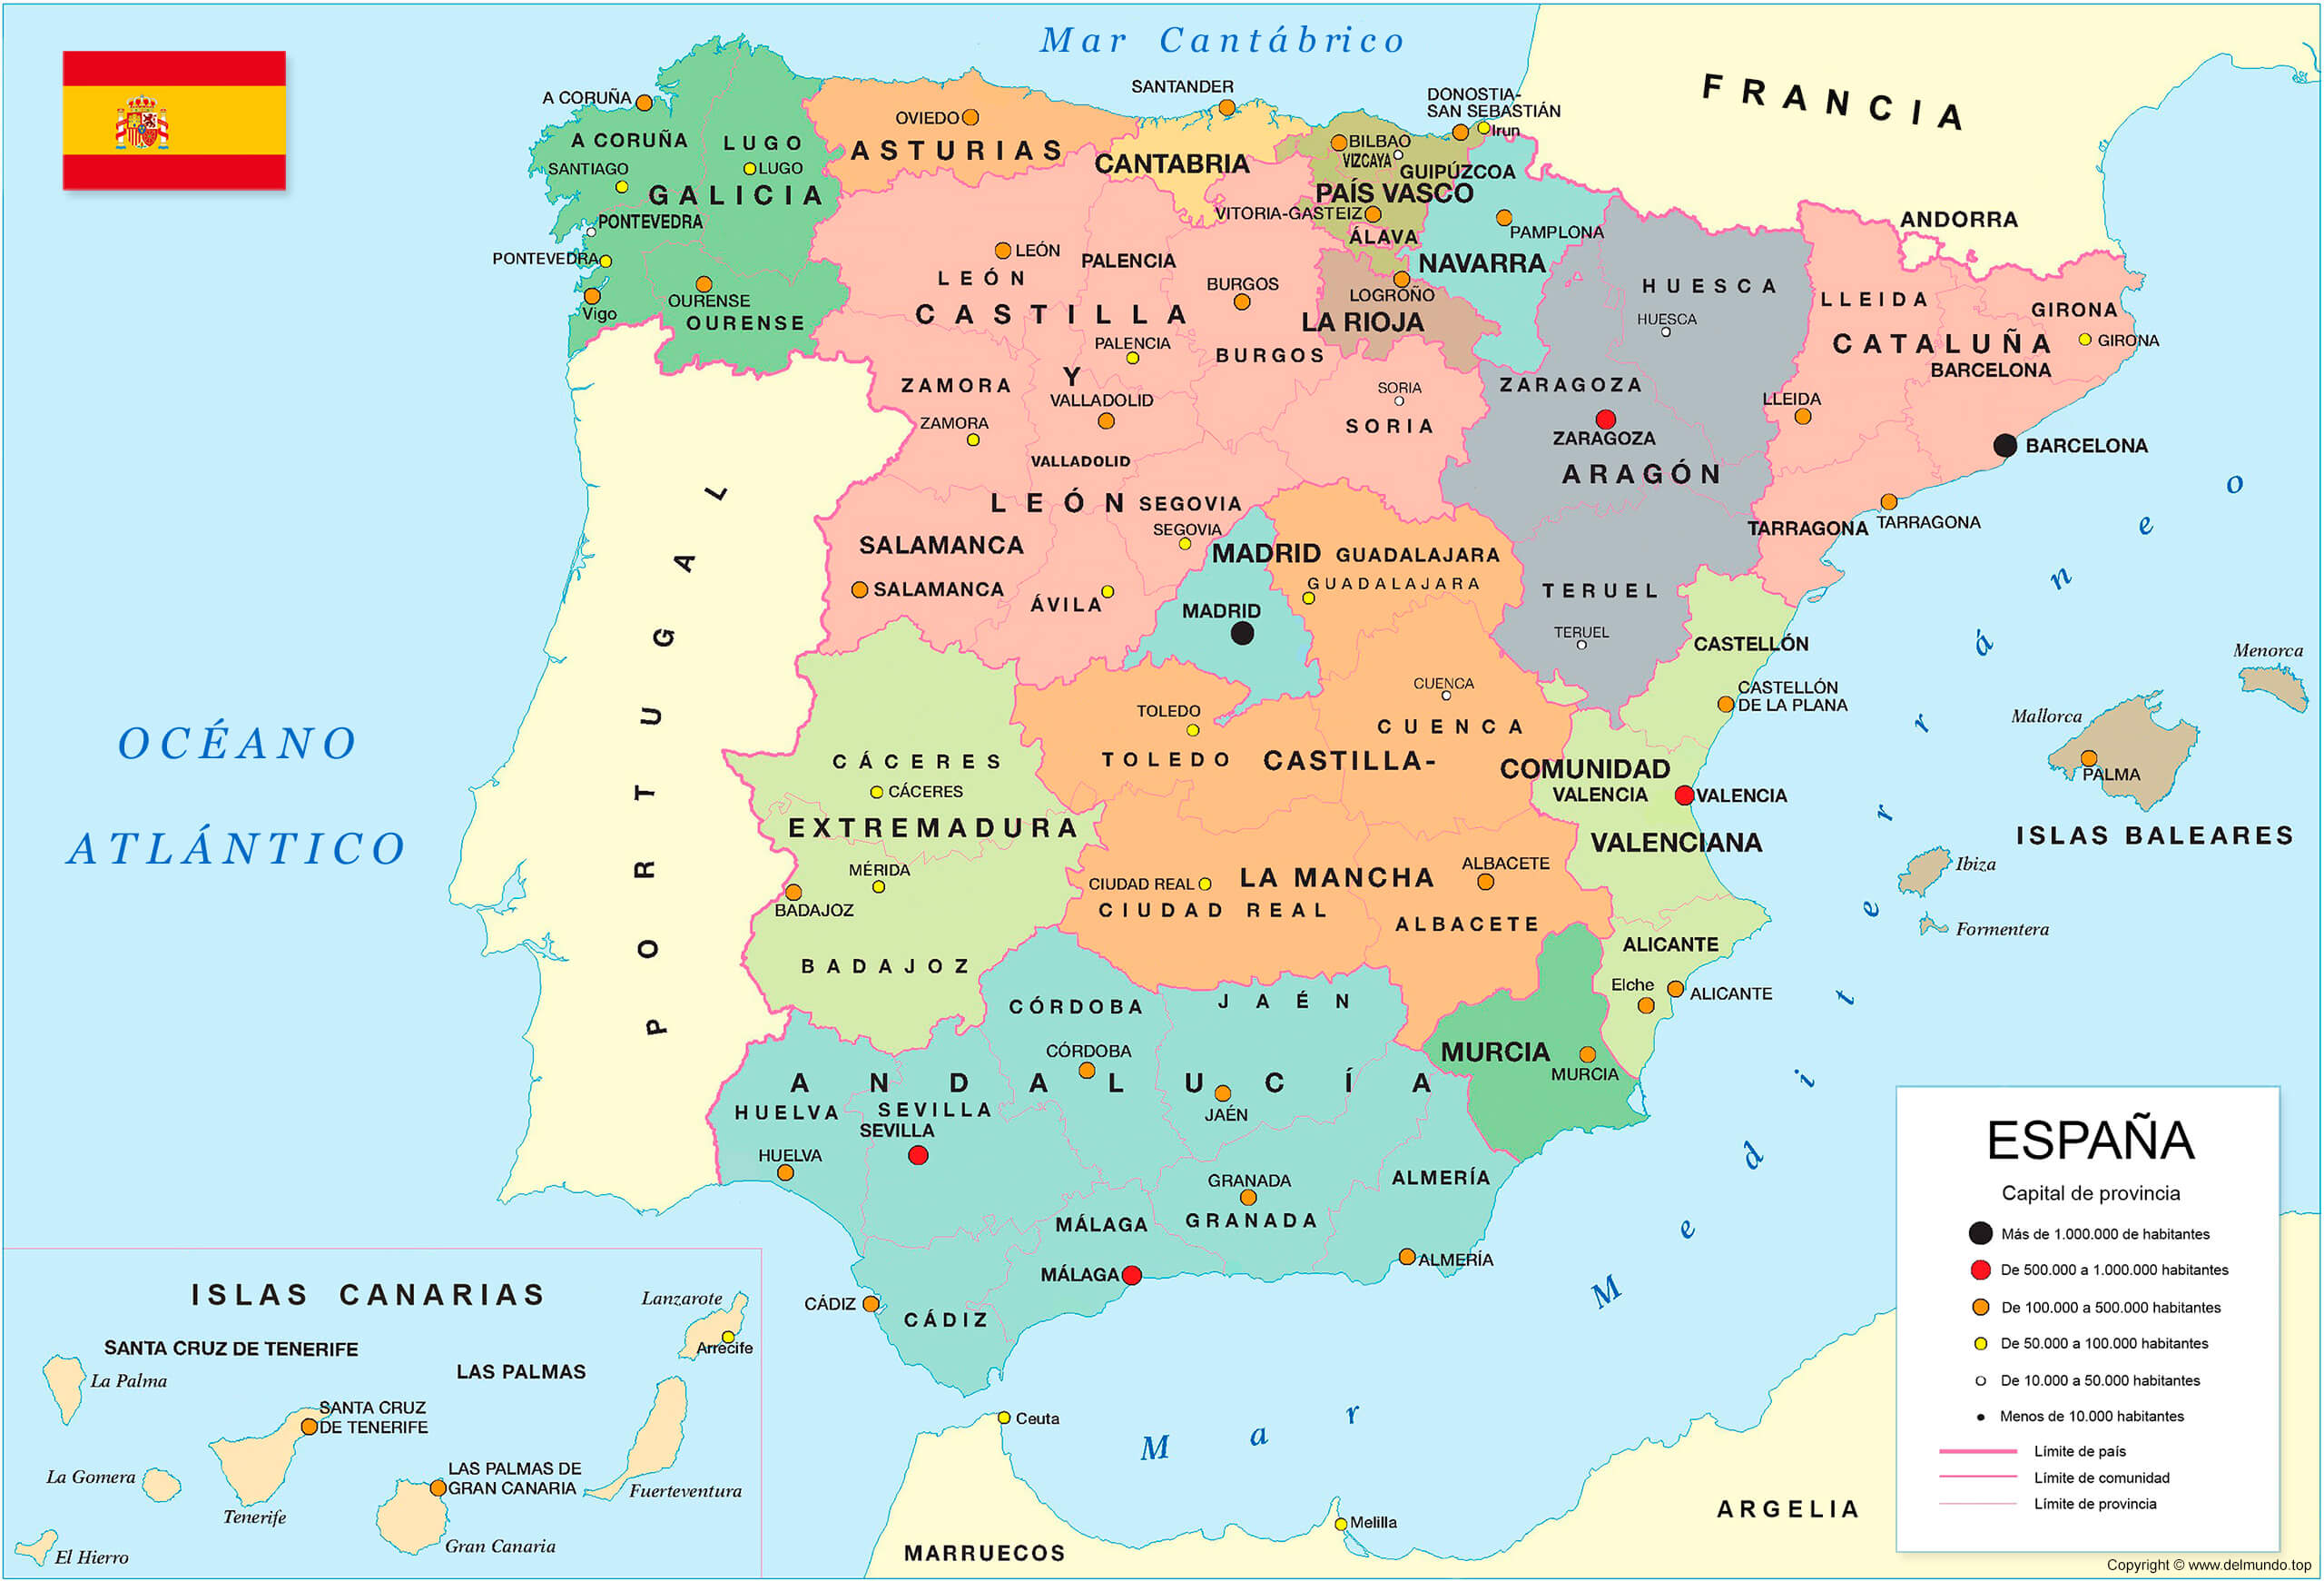 Mapa de las Provincias de España